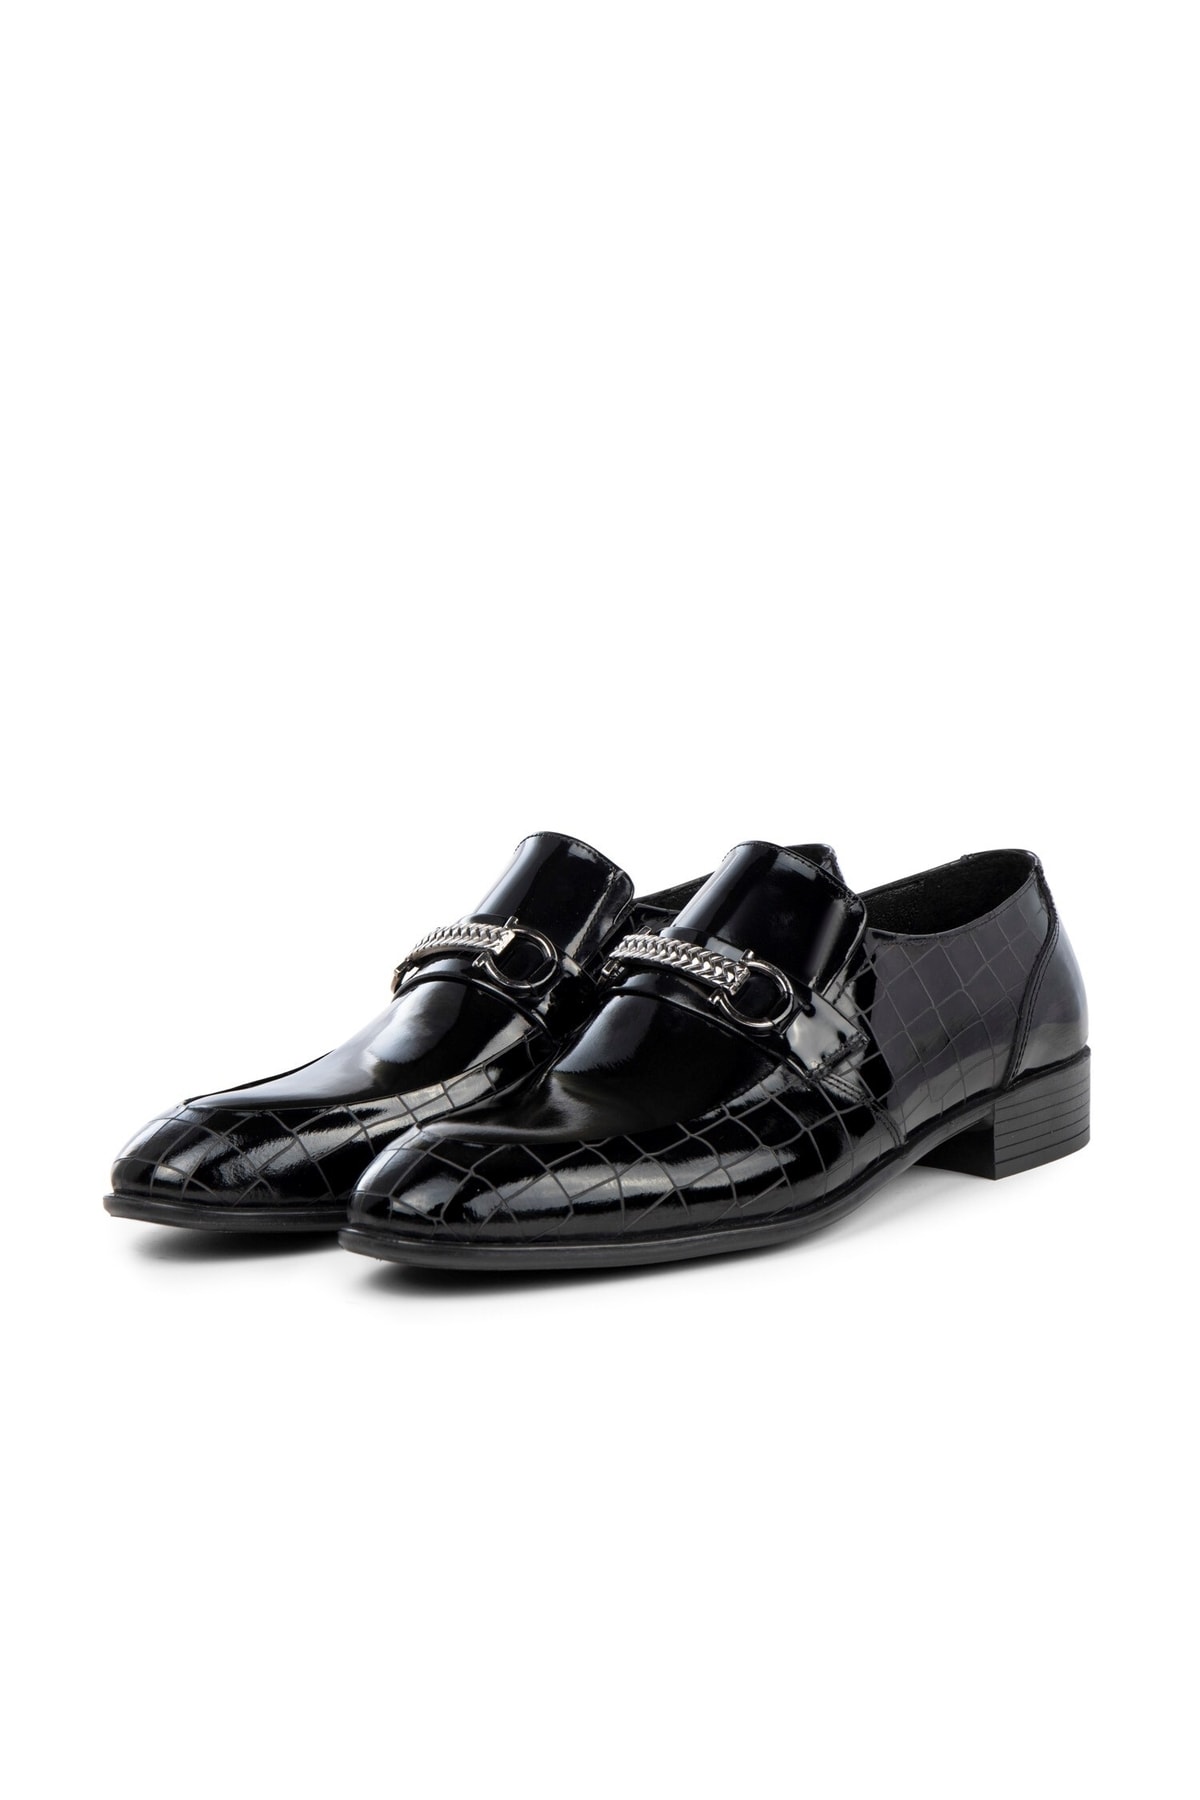 Levně Ducavelli Lunta Genuine Leather Men's Classic Shoes Loafers Classic Shoes